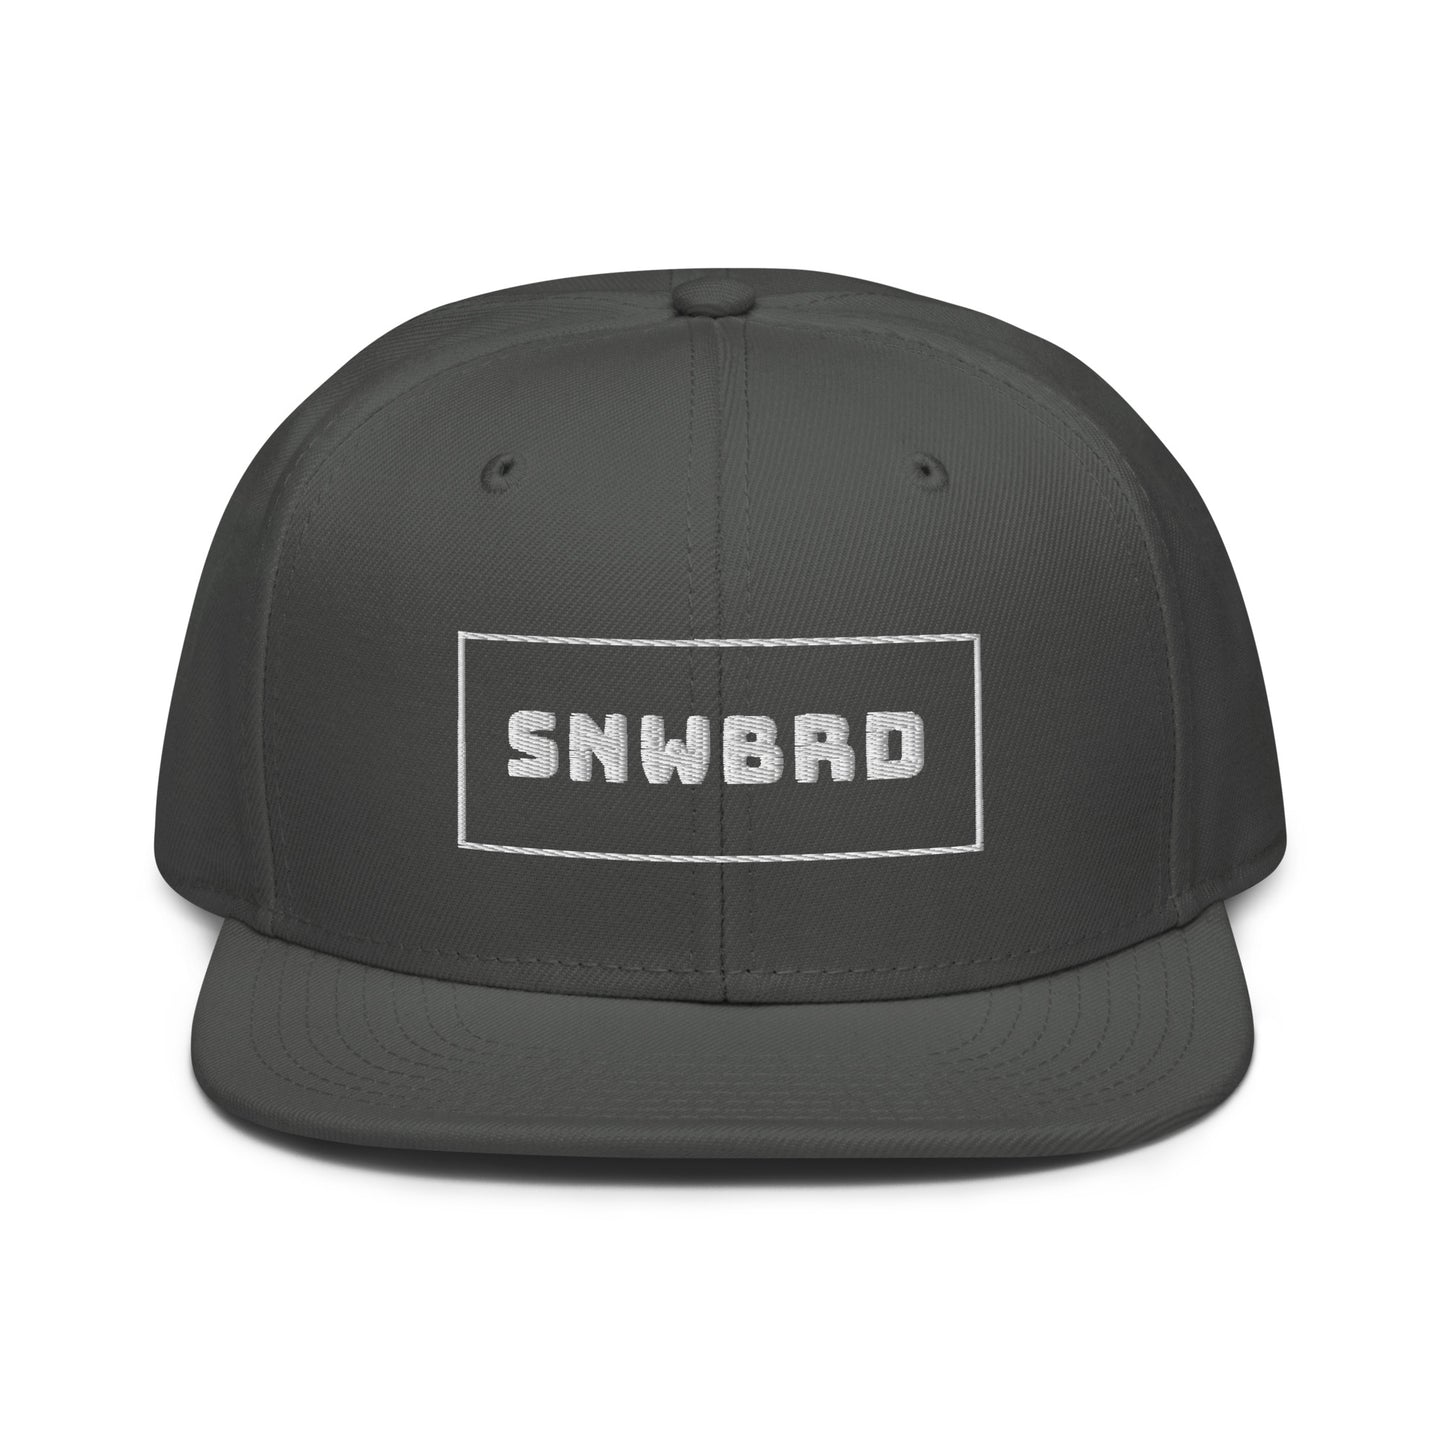 SNWBRD Snapback Hat